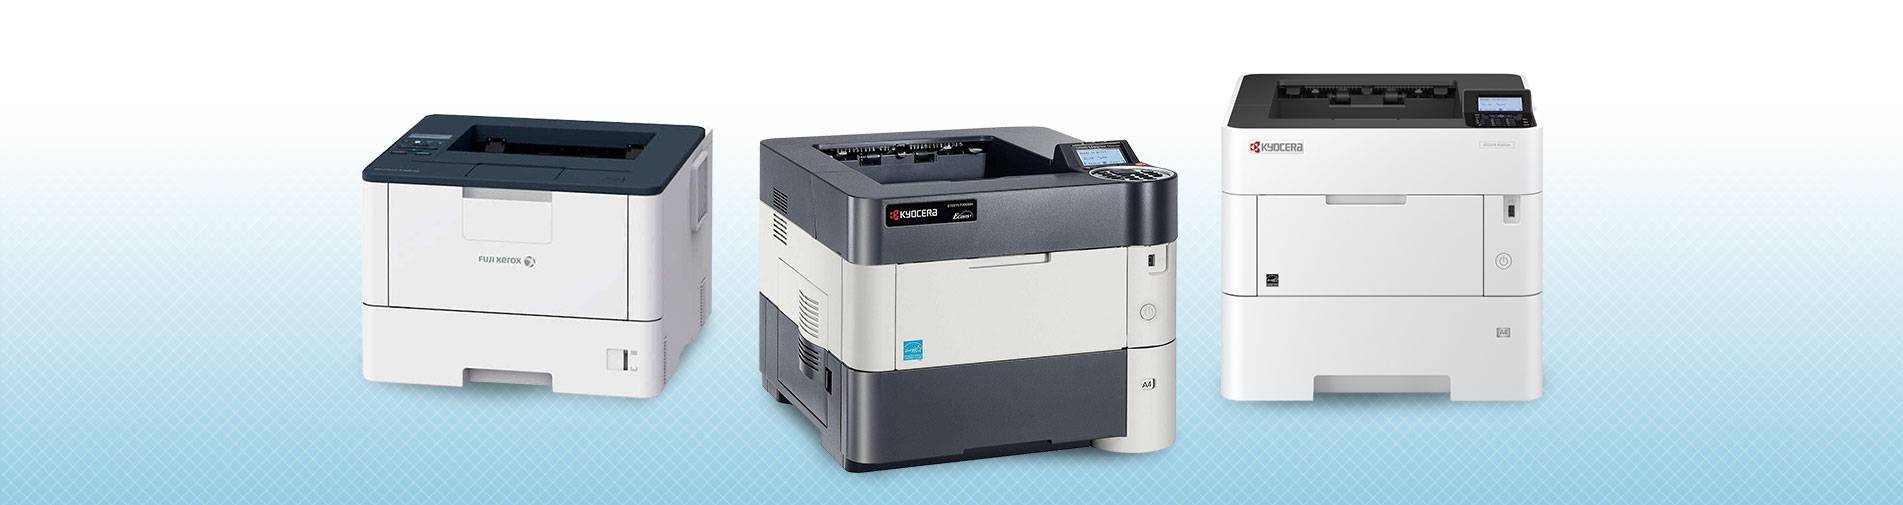 Laser Printer Repair Services Melbourne